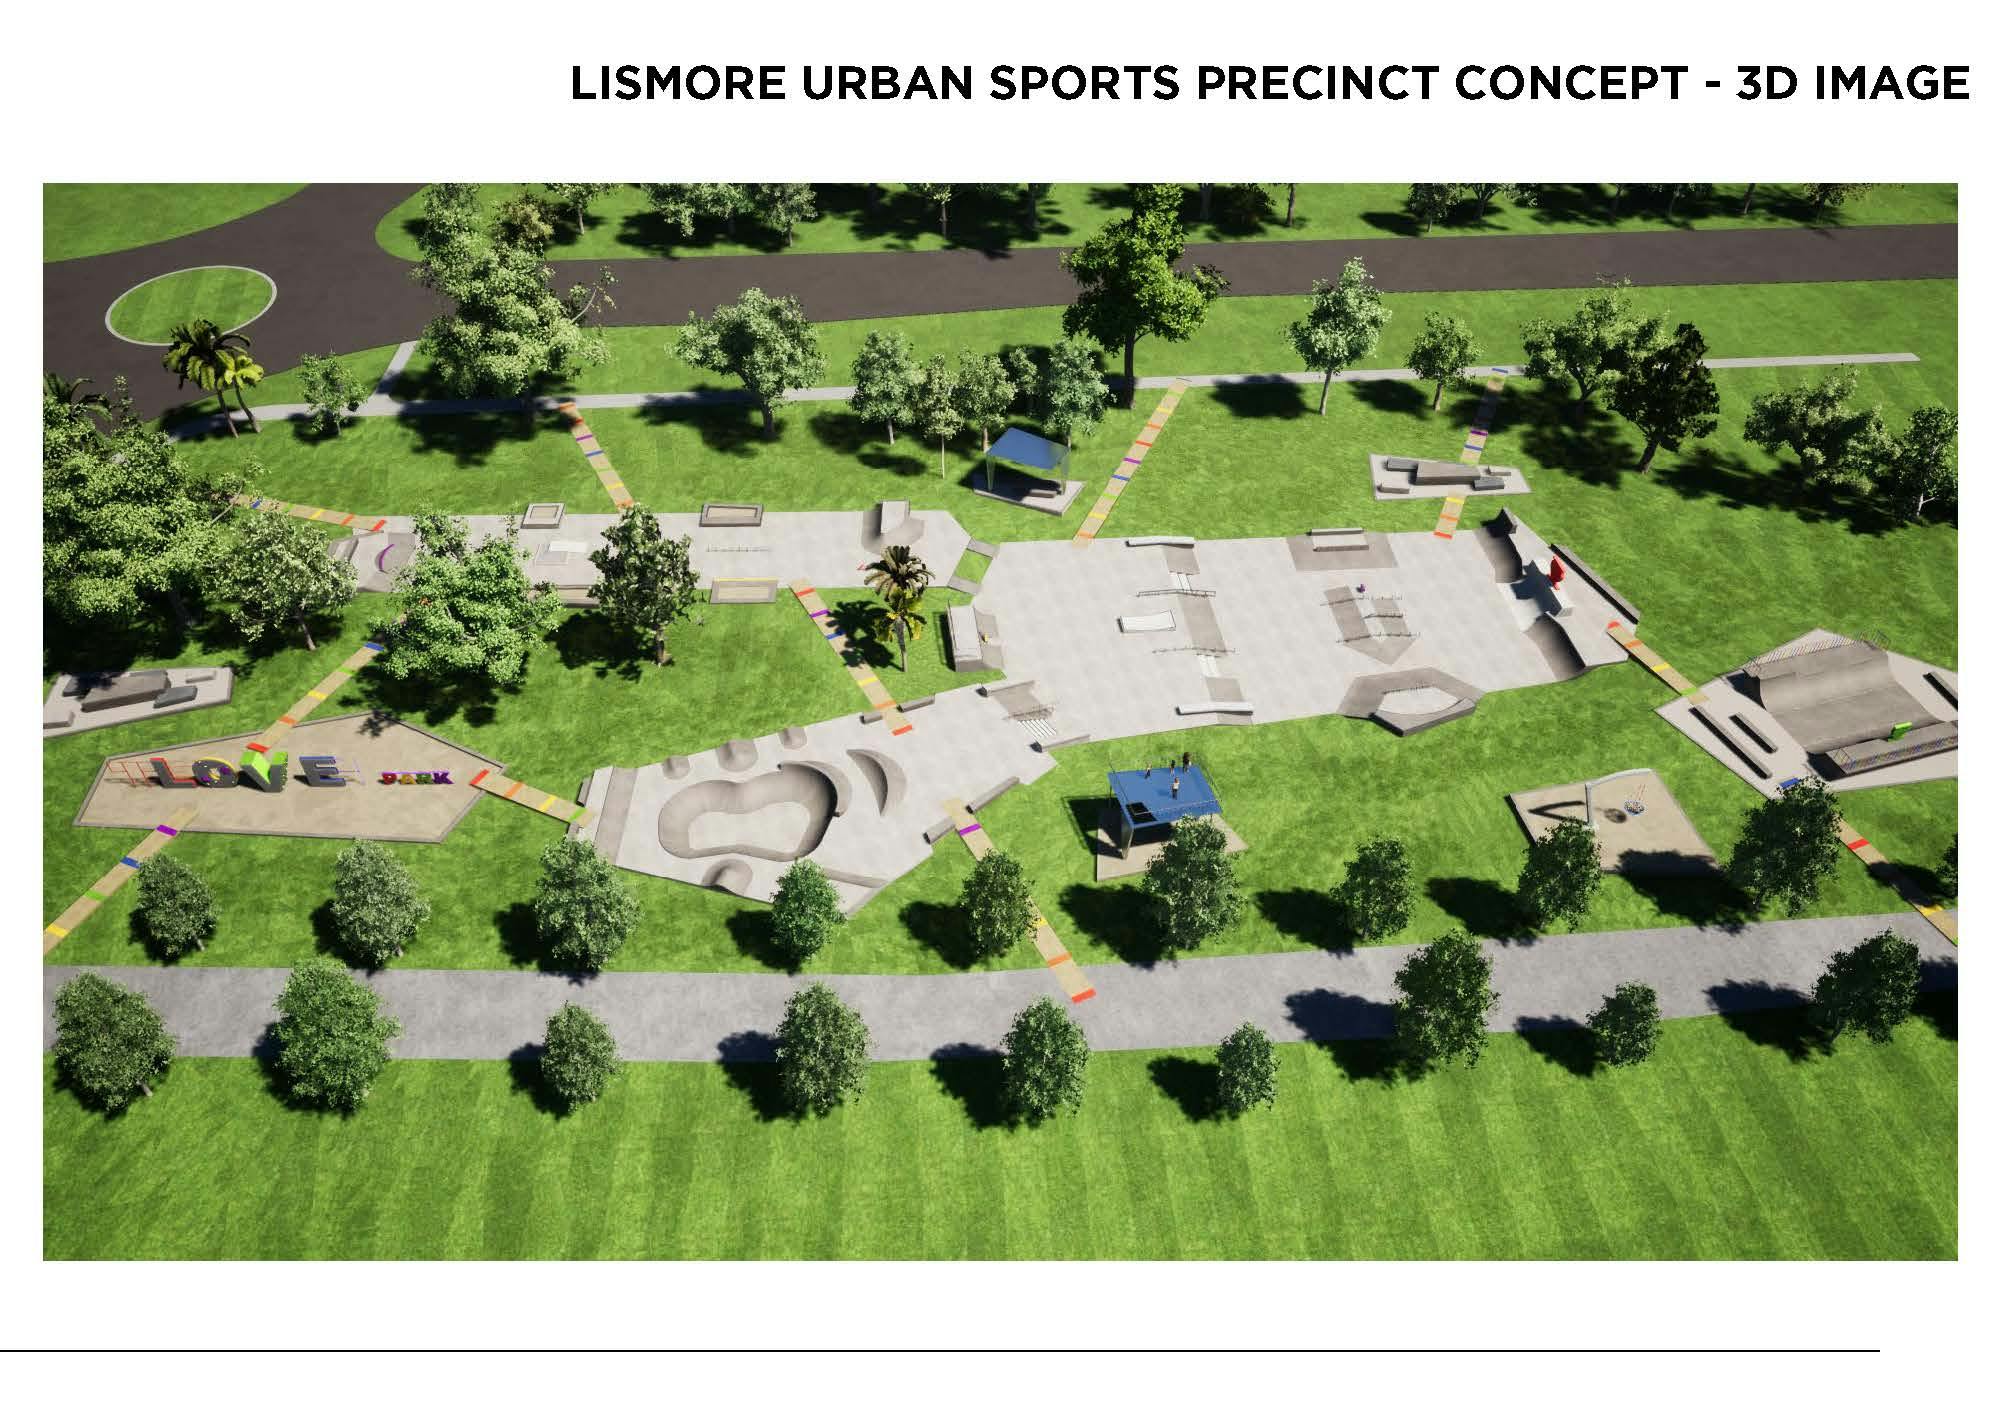 Lismore Urban Sports Precinct concept design_image_1.jpg